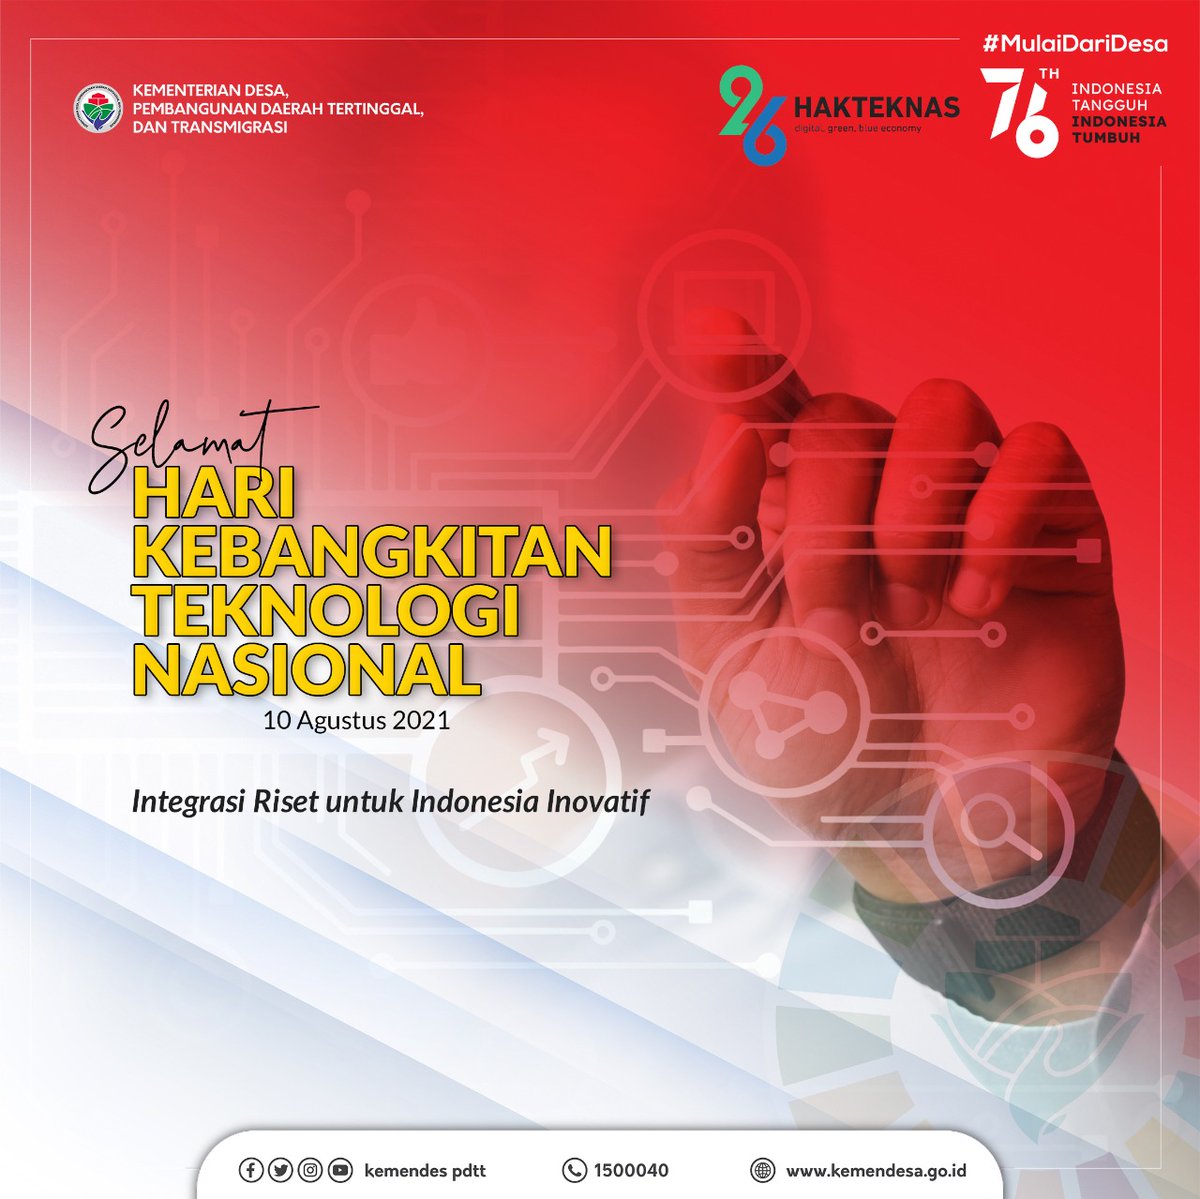 Selamat Hari Kebangkitan Teknologi Nasional (Hakteknas) ke-26.

Pada tahun ini, peringatan Harteknas mengangkat tema 'Integrasi Riset untuk Indonesia Inovatif: Digital, Green, Blue Economy'.

Semoga dengan kemajuan iptek dapat membantu kita dalam menghadapi Pandemi Covid-19.